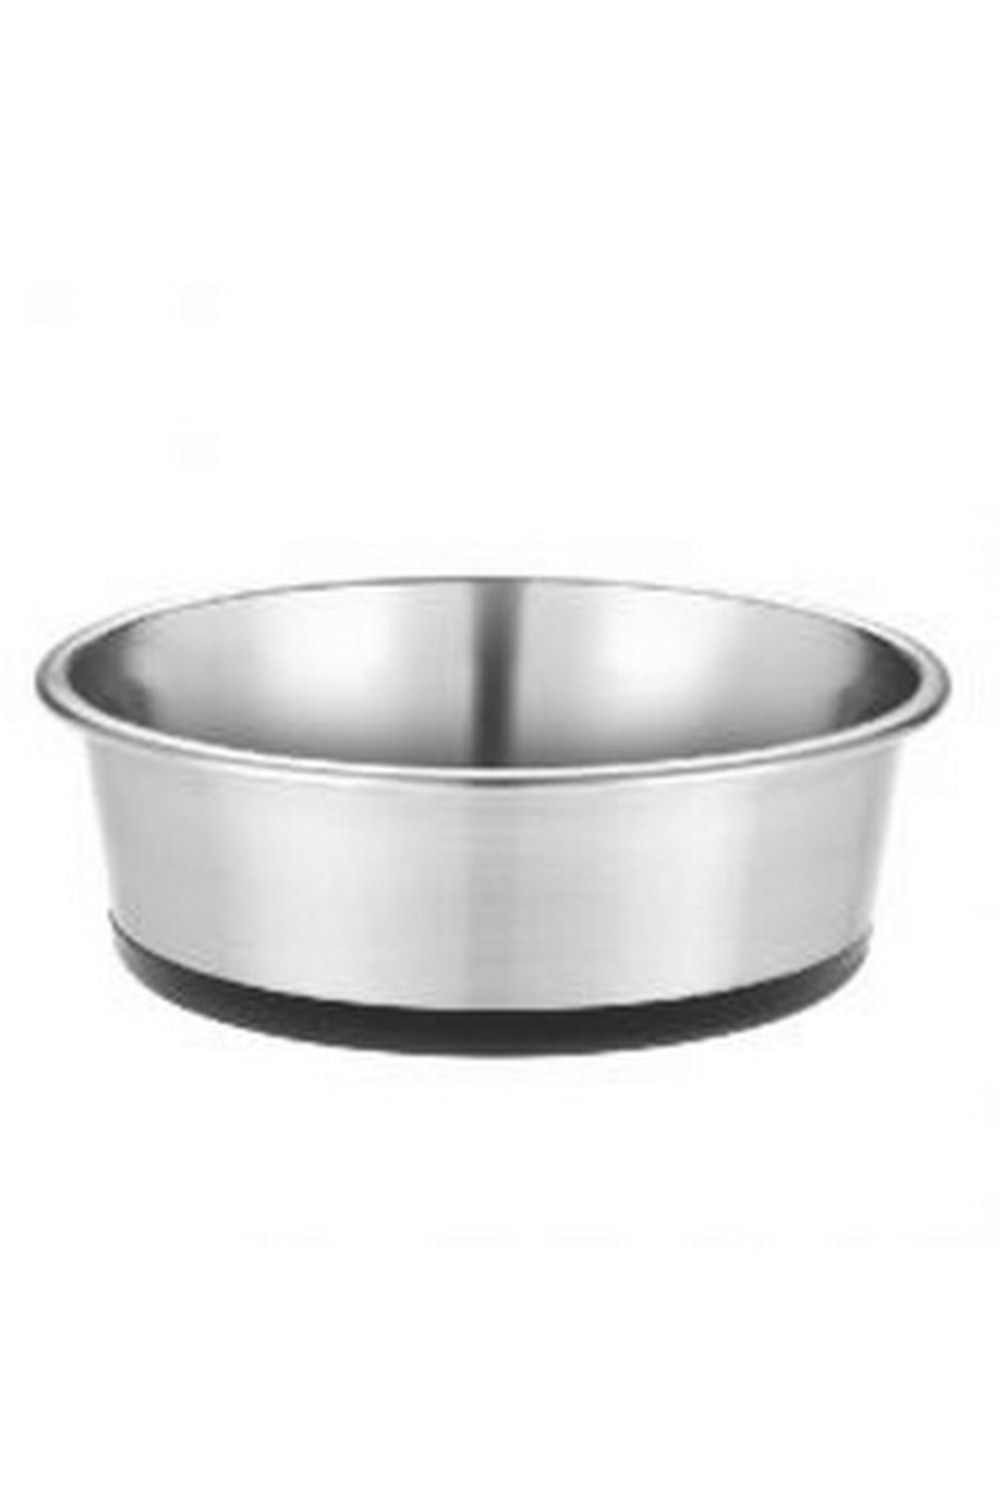 Caldex Premium Stainless Steel Non Slip Dish (Silver) (5in)